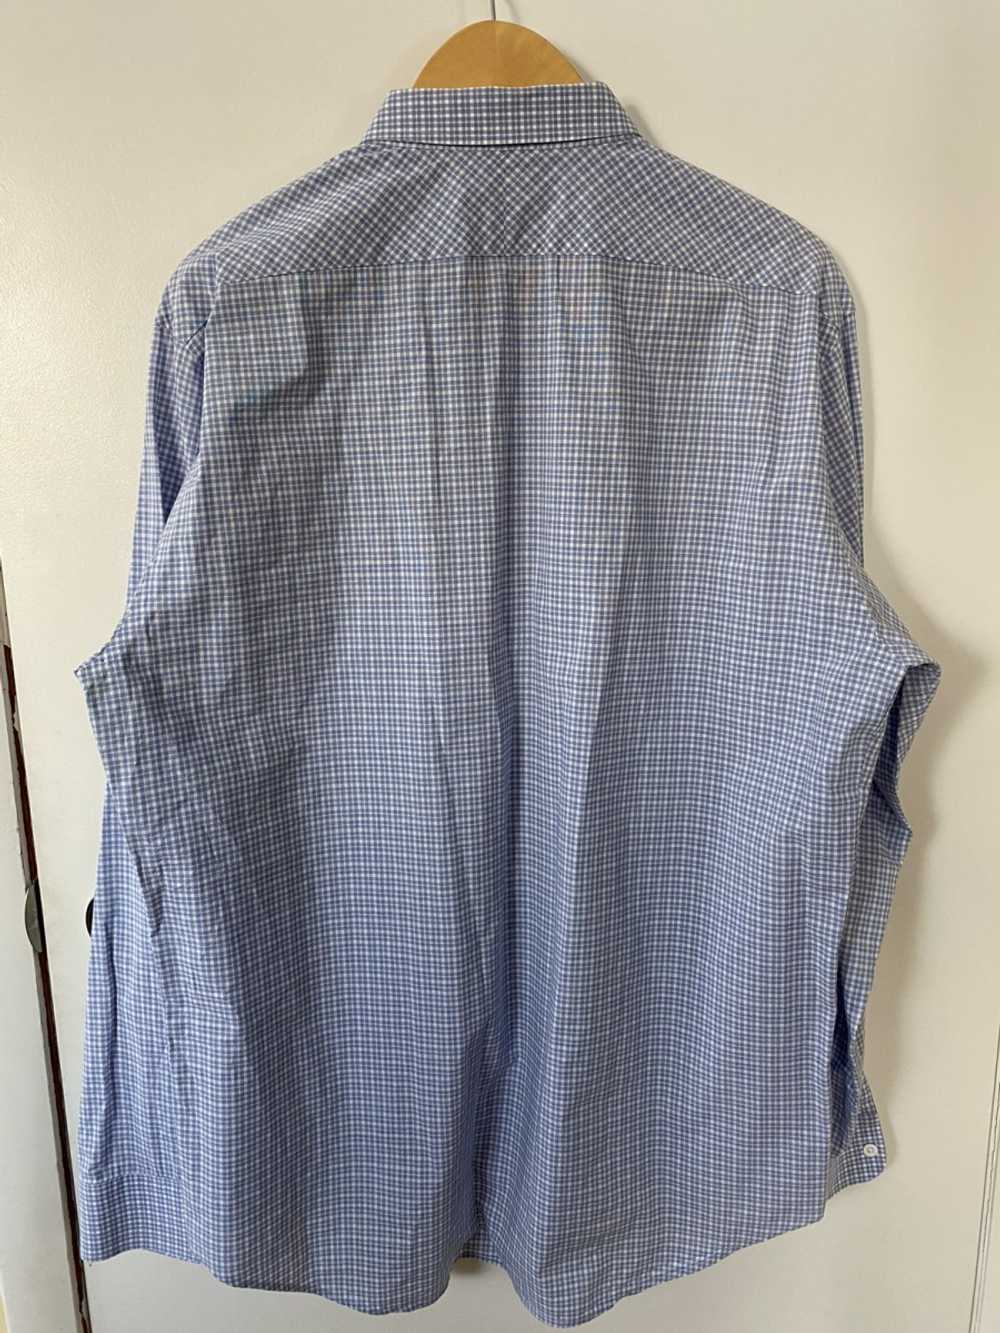 Billy Reid - Light Blue Check Shirt - image 2